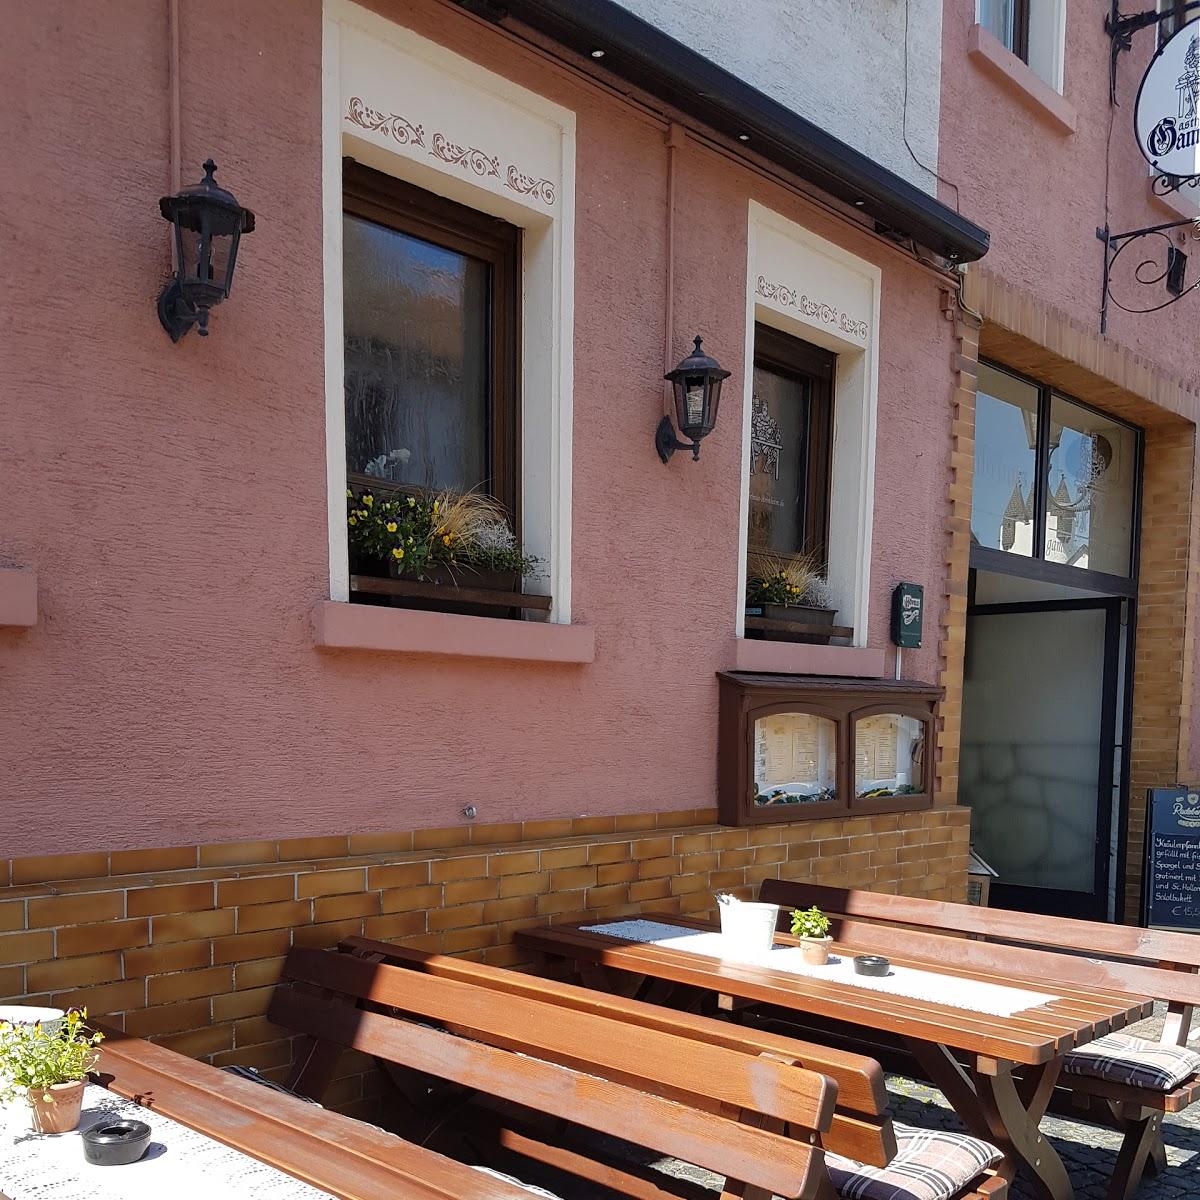 Restaurant "Gambrinus Restaurant" in Hanau